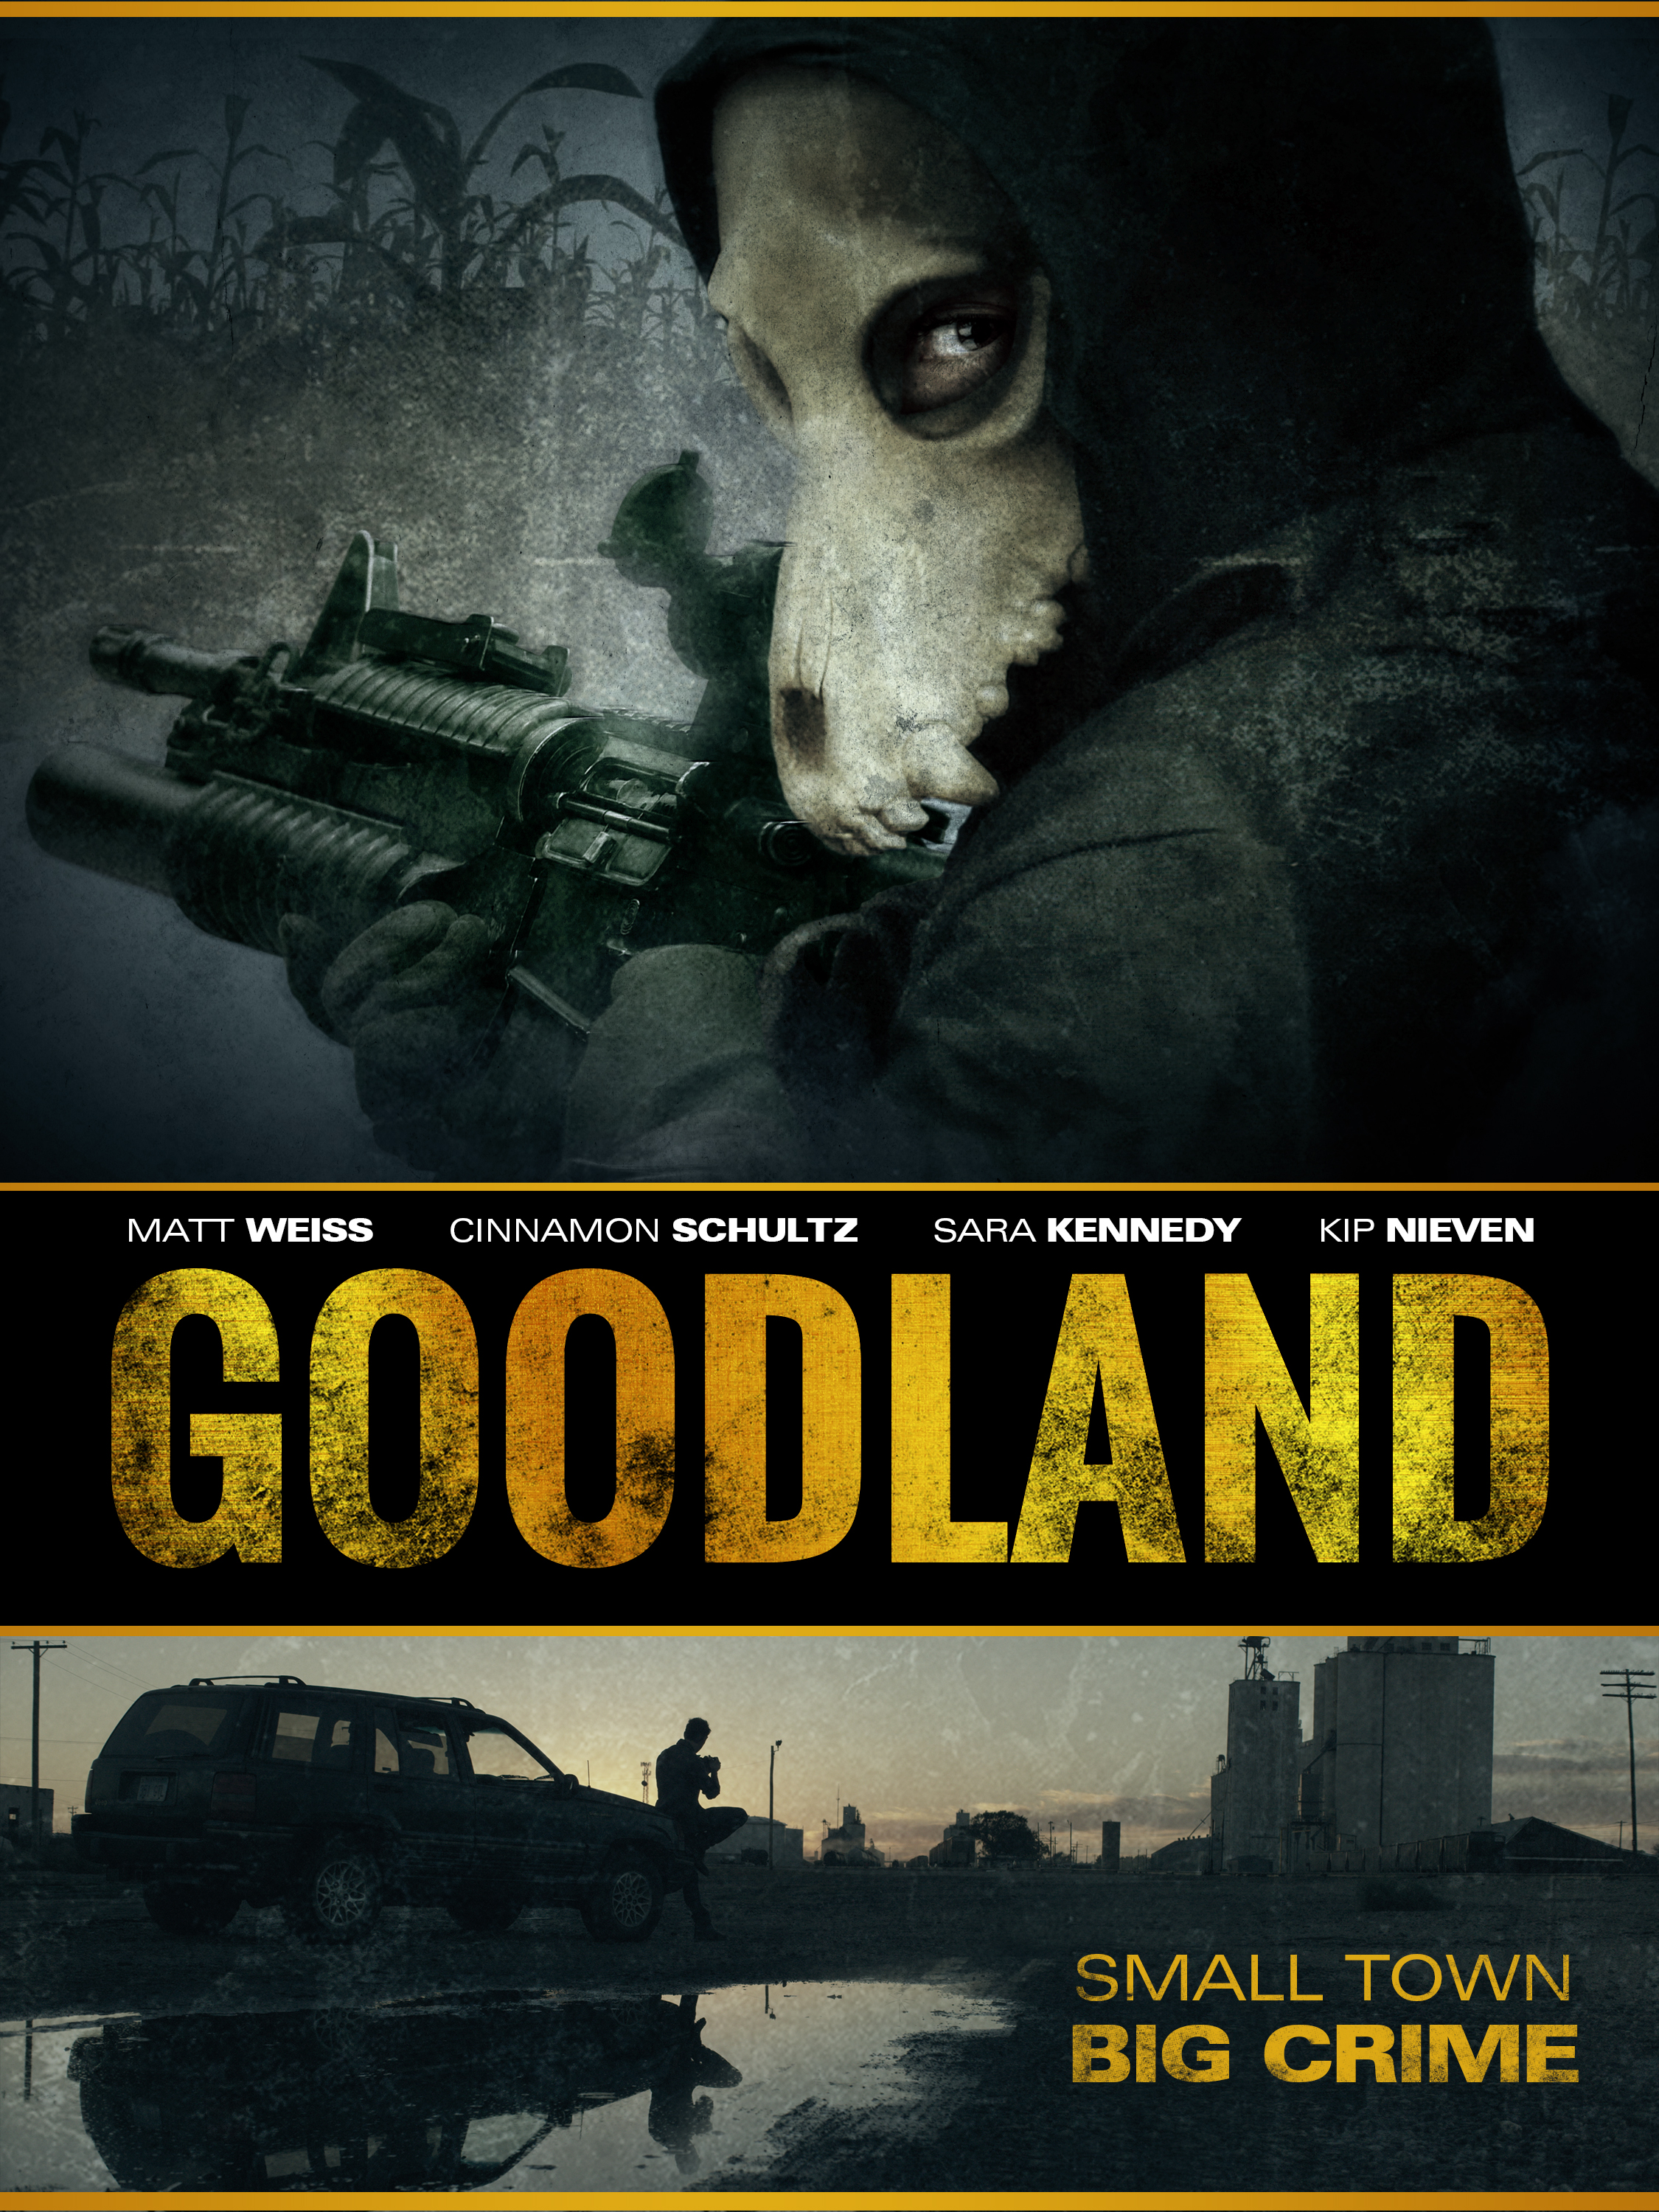 Nonton film Goodland layarkaca21 indoxx1 ganool online streaming terbaru